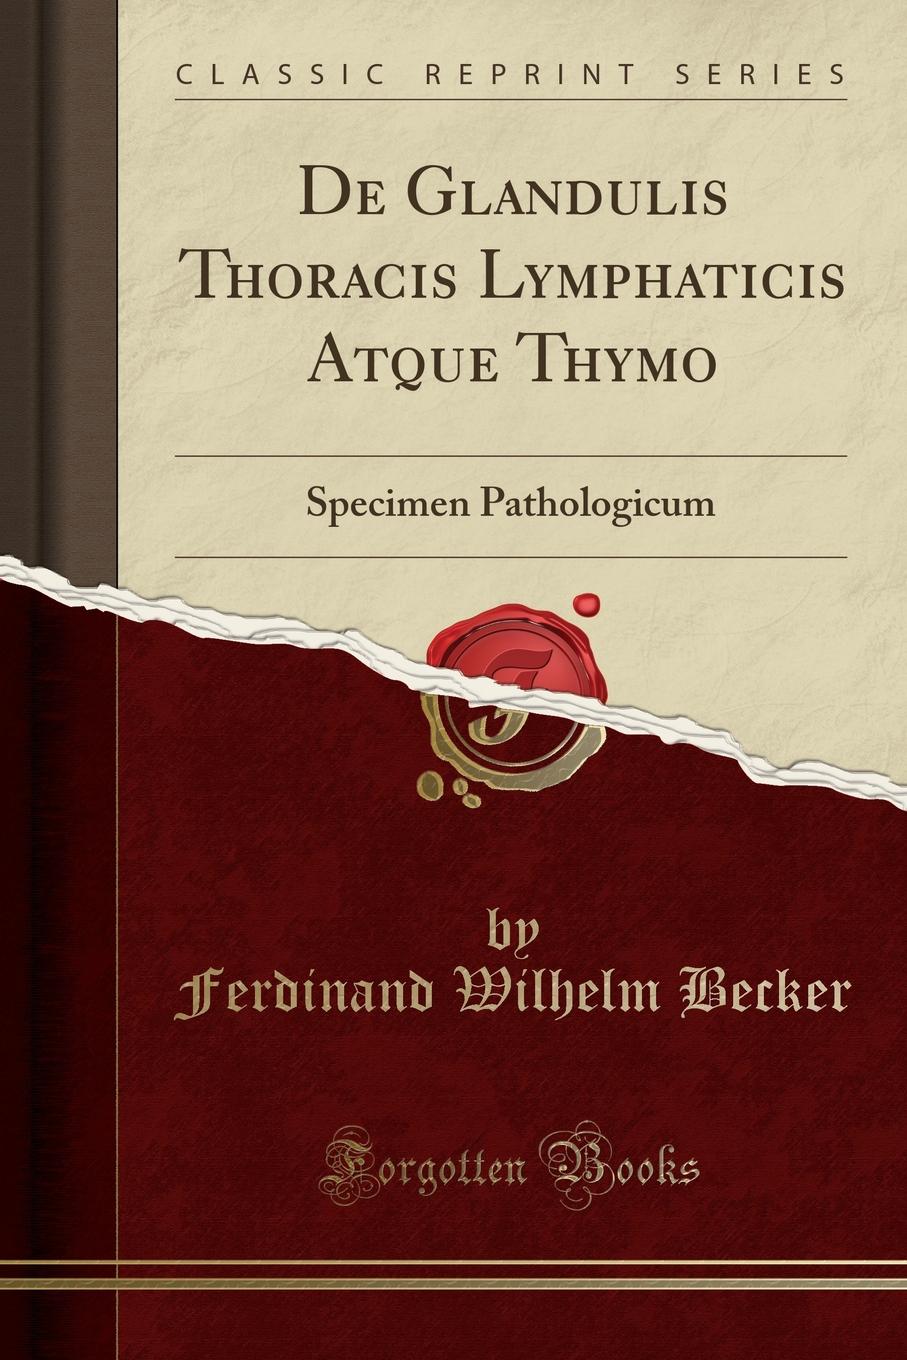 De Glandulis Thoracis Lymphaticis Atque Thymo. Specimen Pathologicum (Classic Reprint)